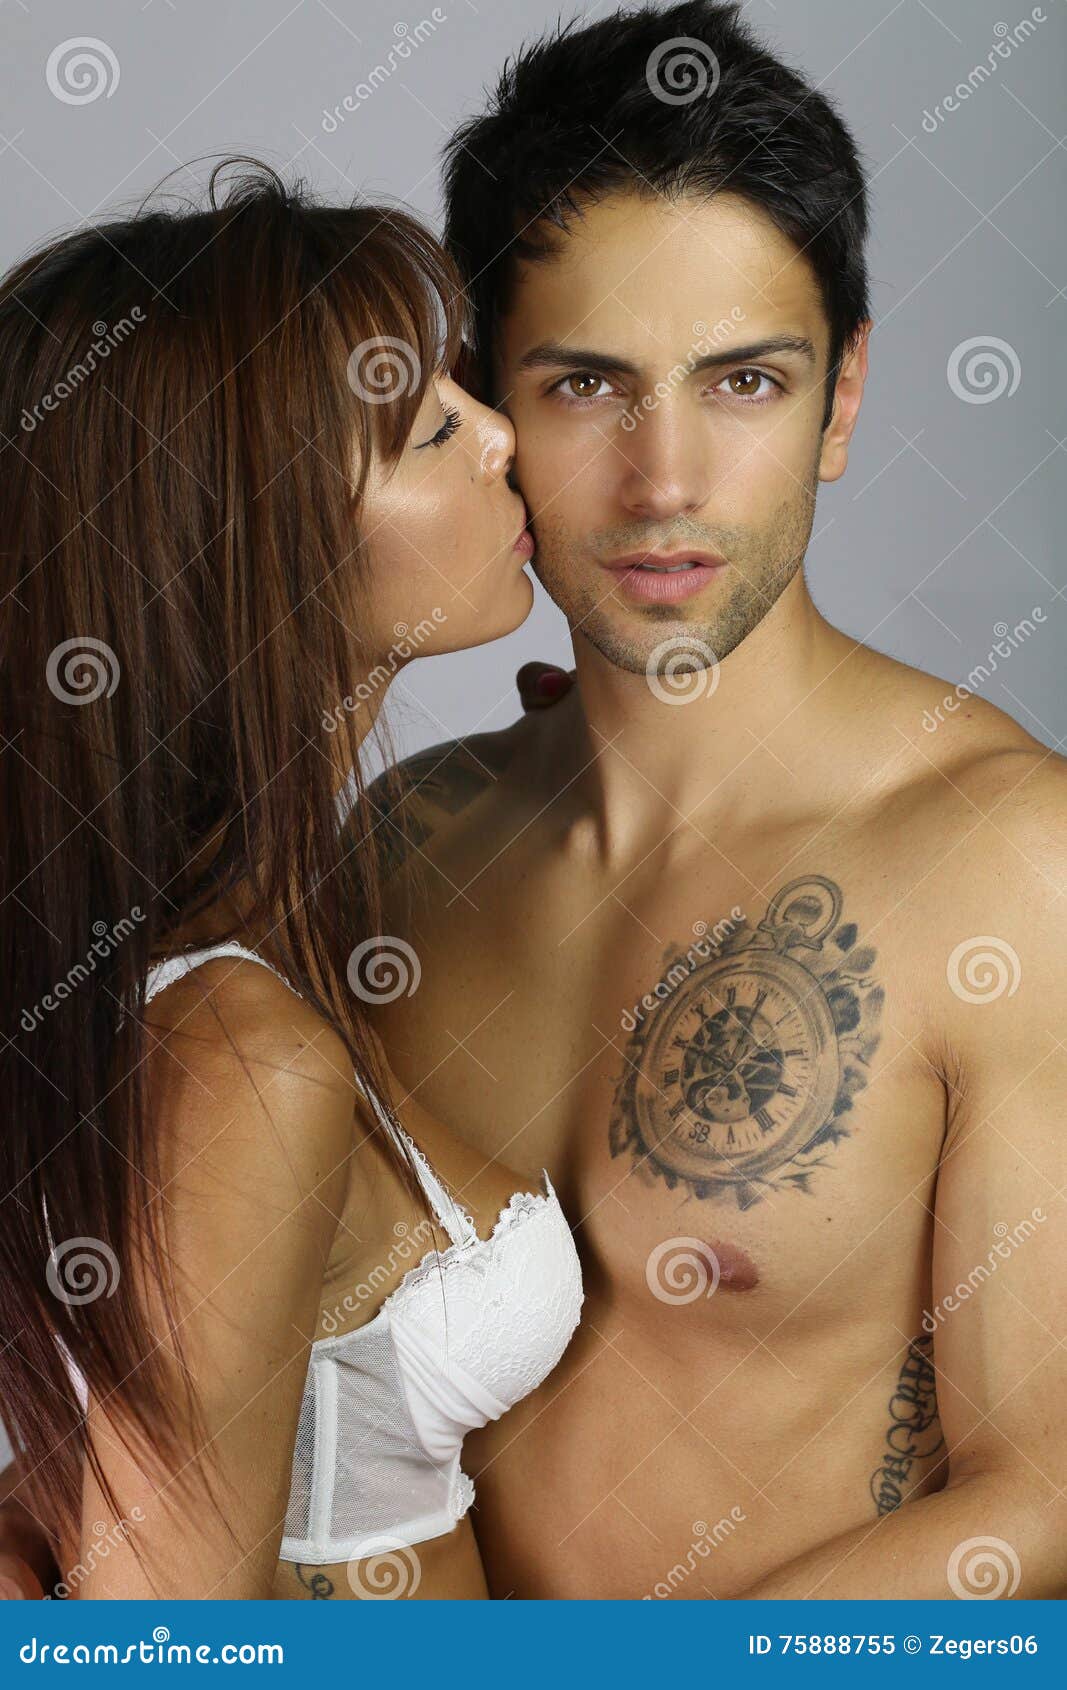 Beautiful naked women kissing man